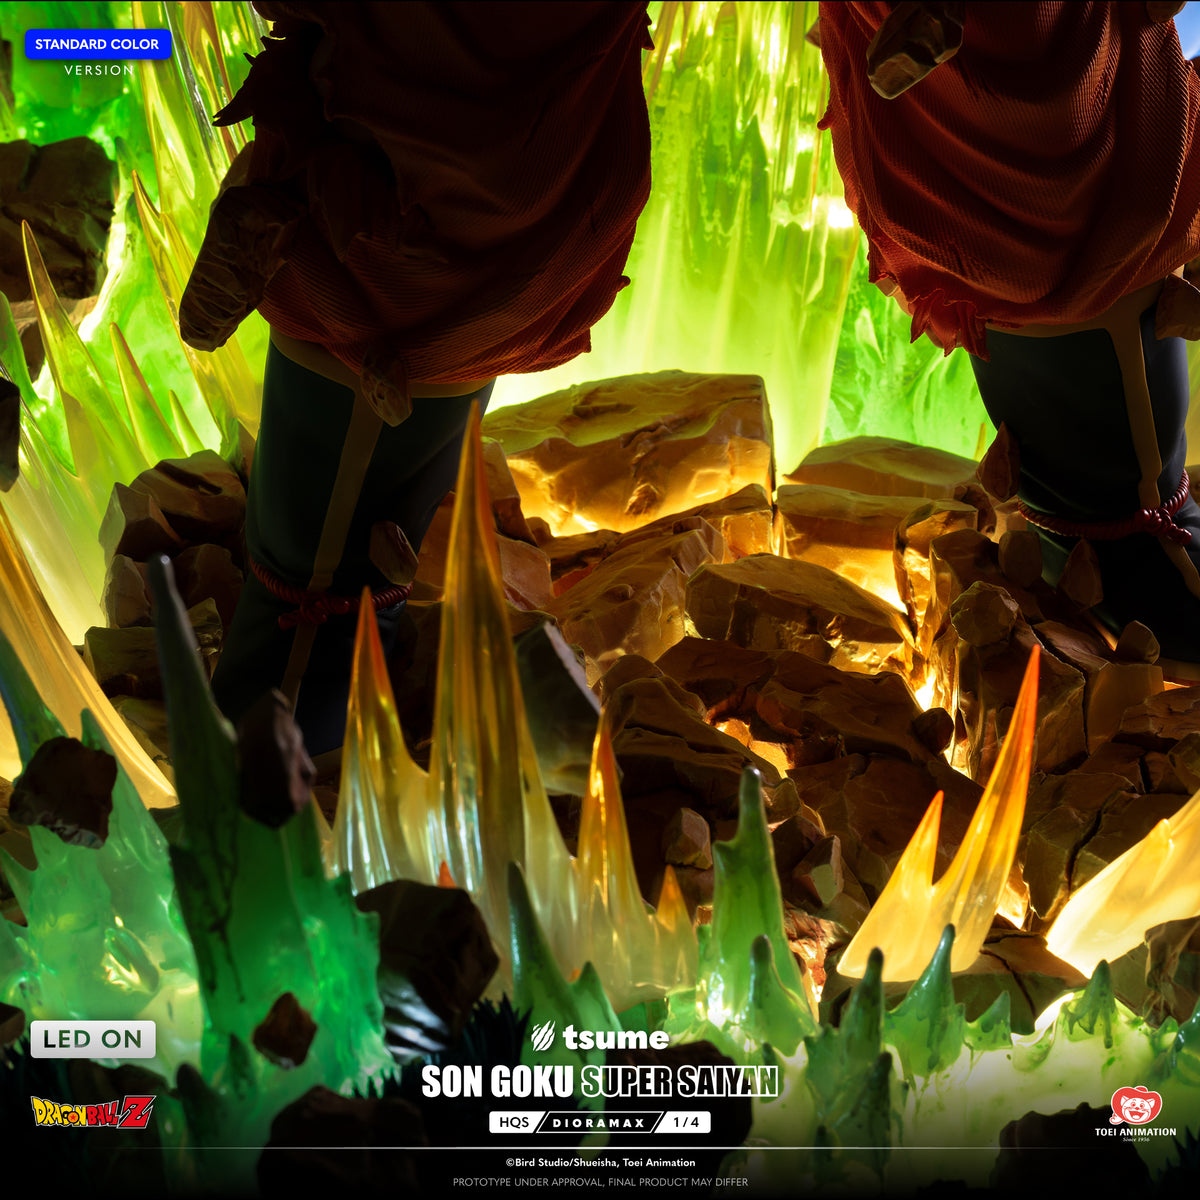 [PREORDER] HQS Dioramax Son Goku Super Saiyan - Standard Edition